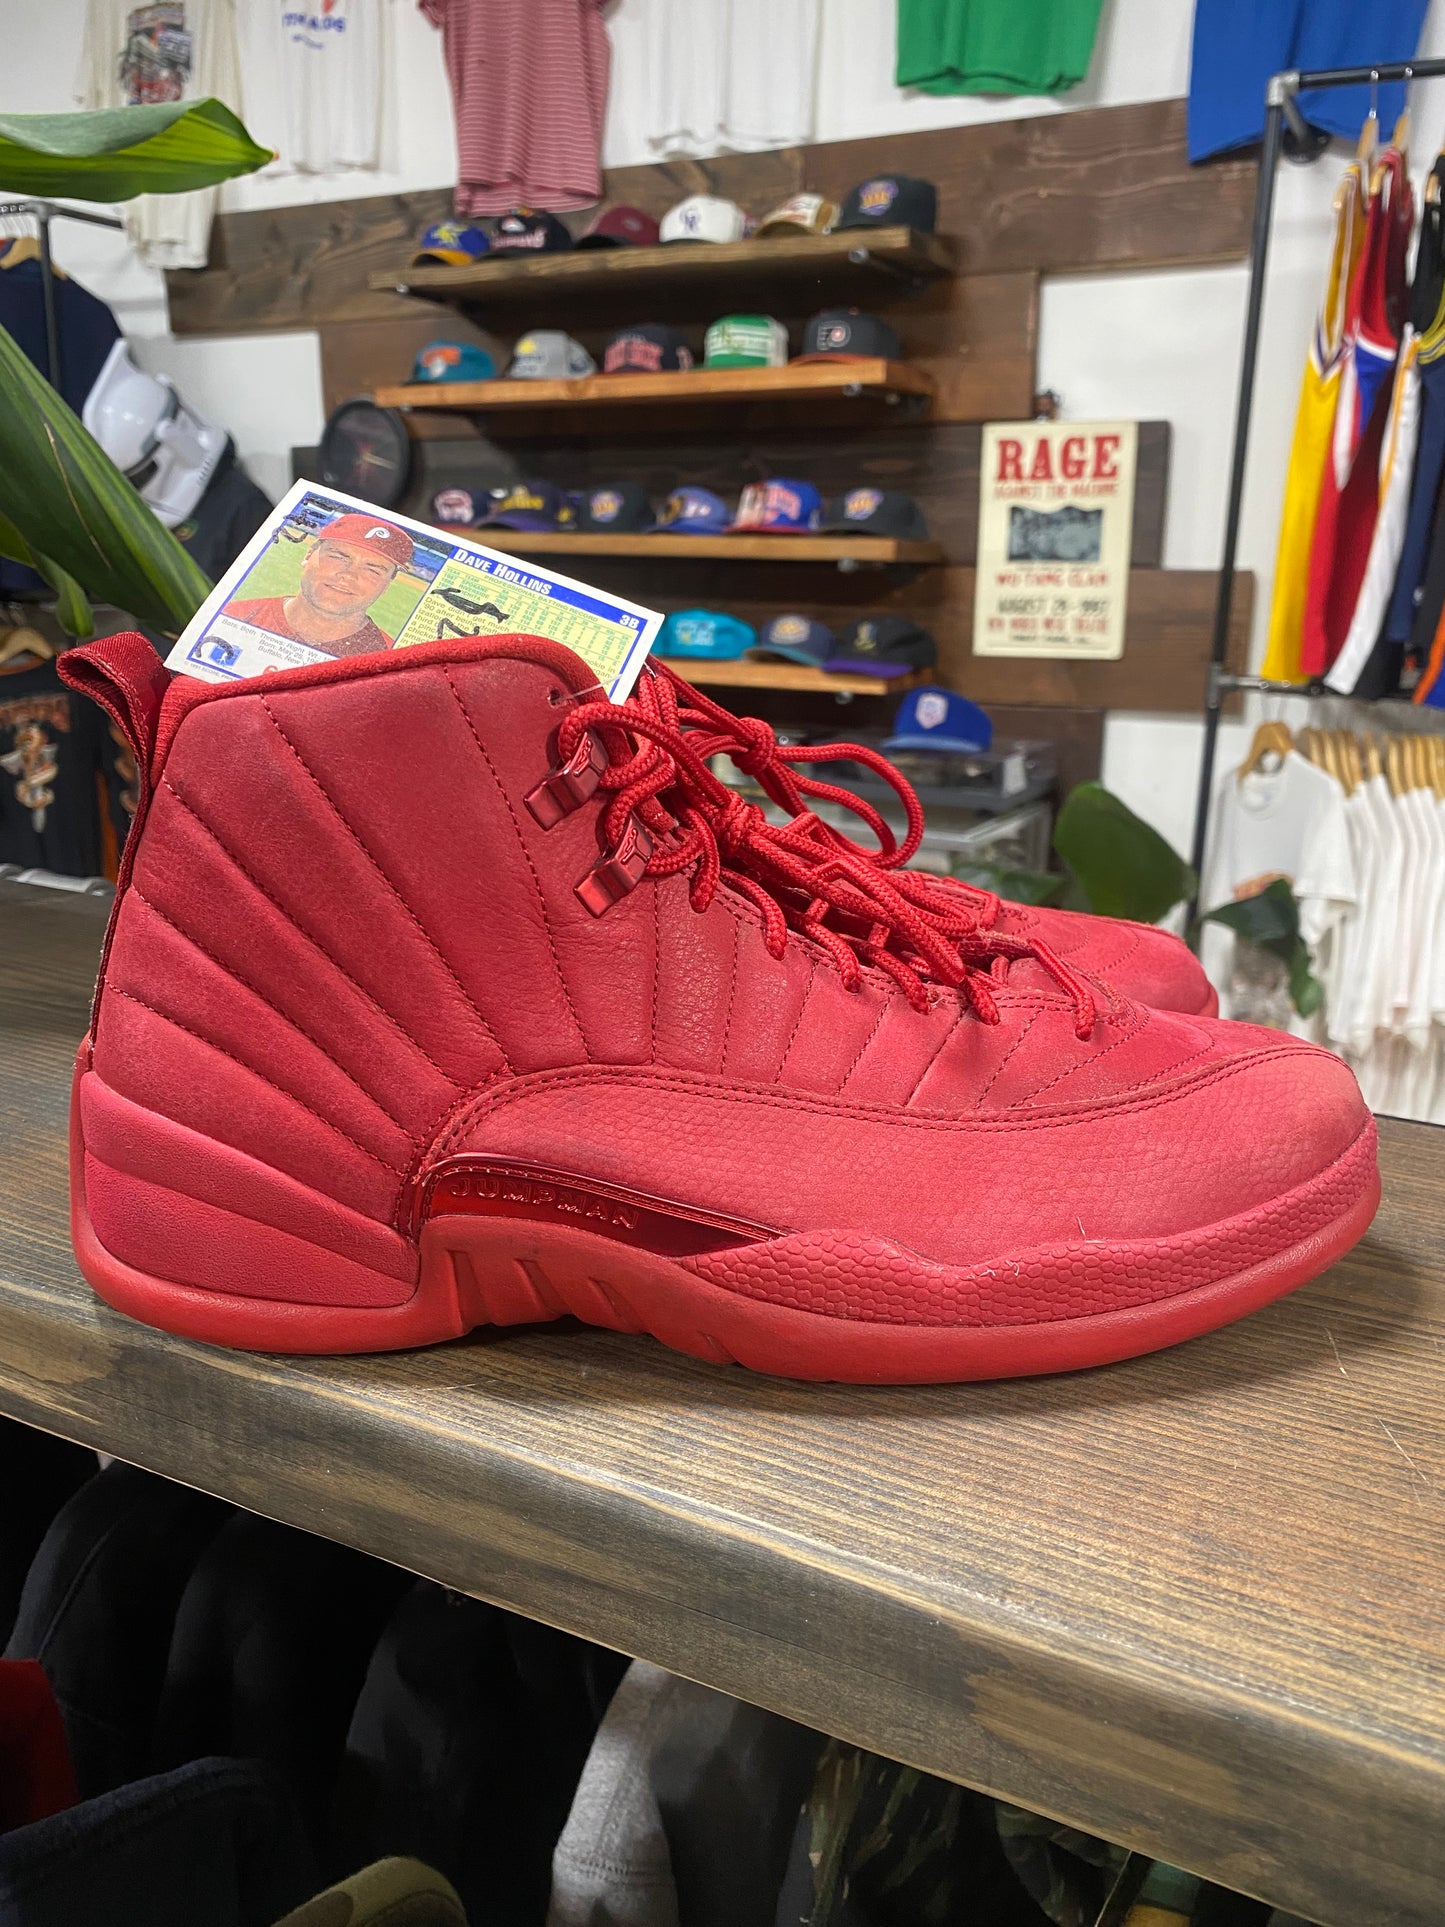 Jordan 12 'Red Suede' Size 9.5